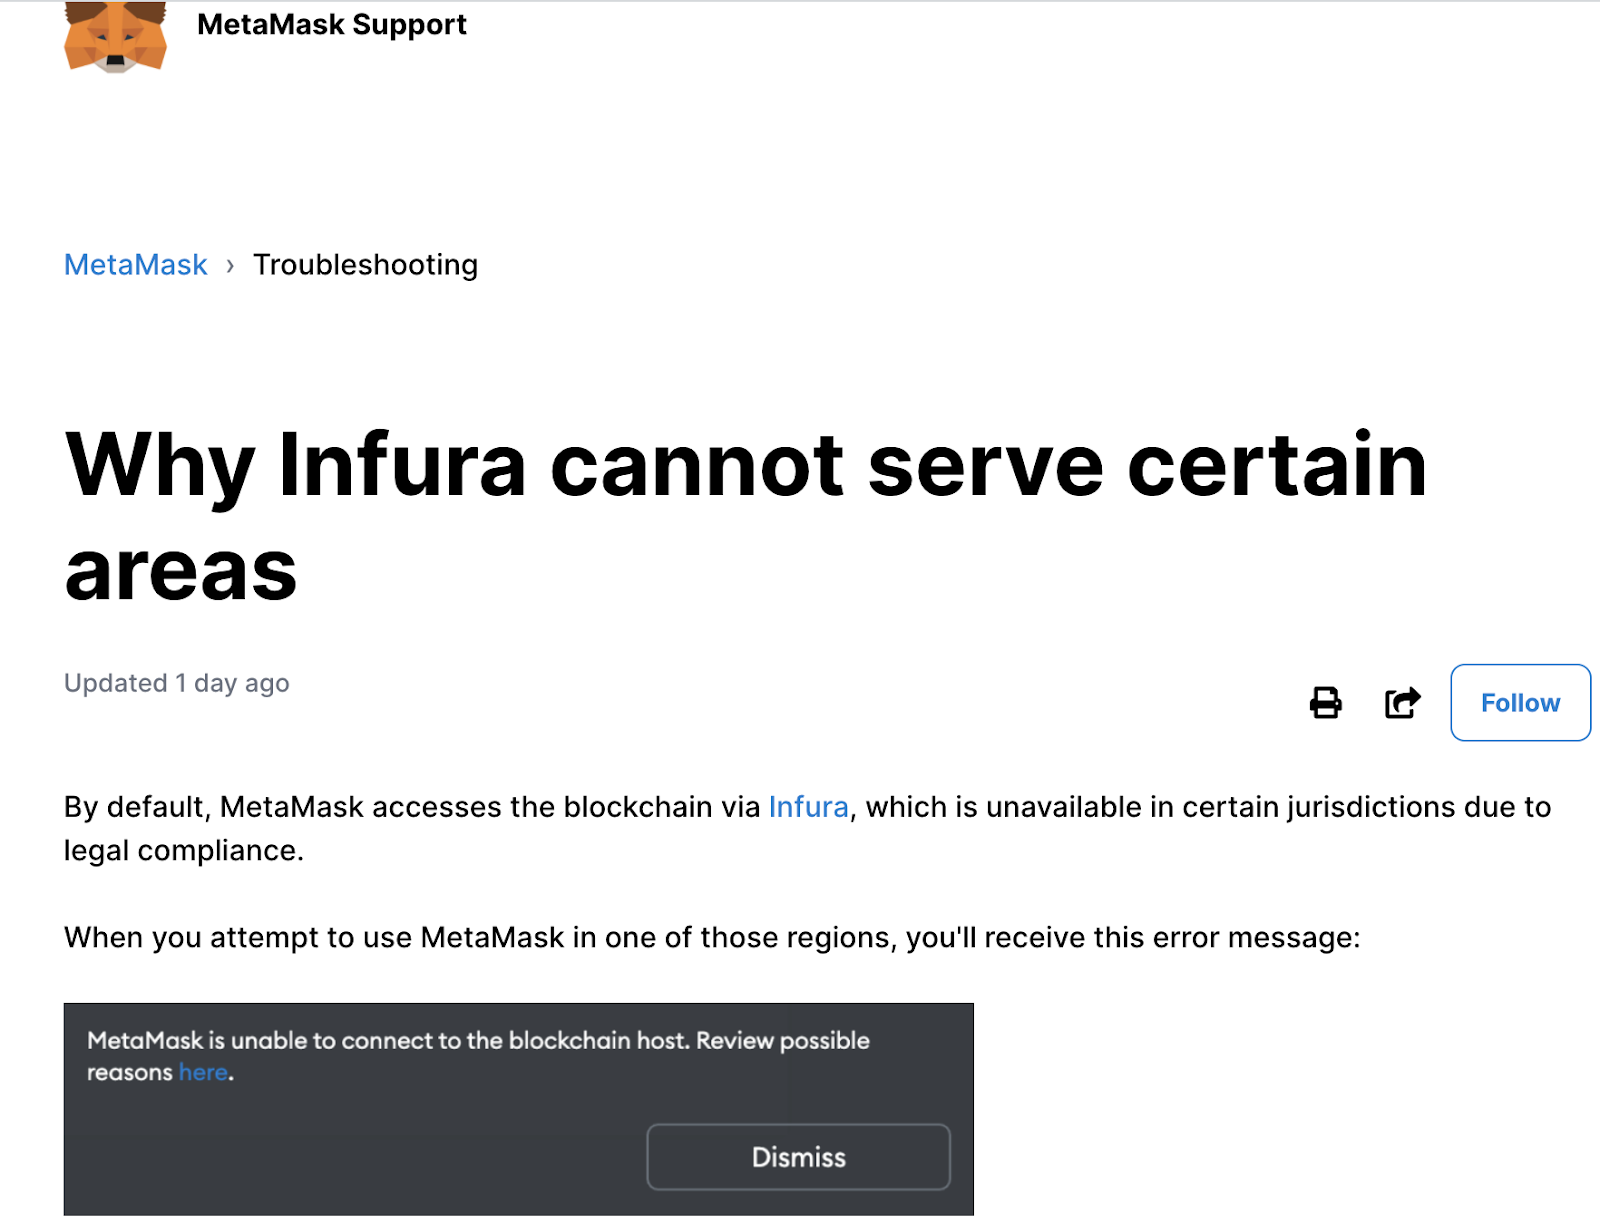 Does MetaMask censor Venezuelan users?